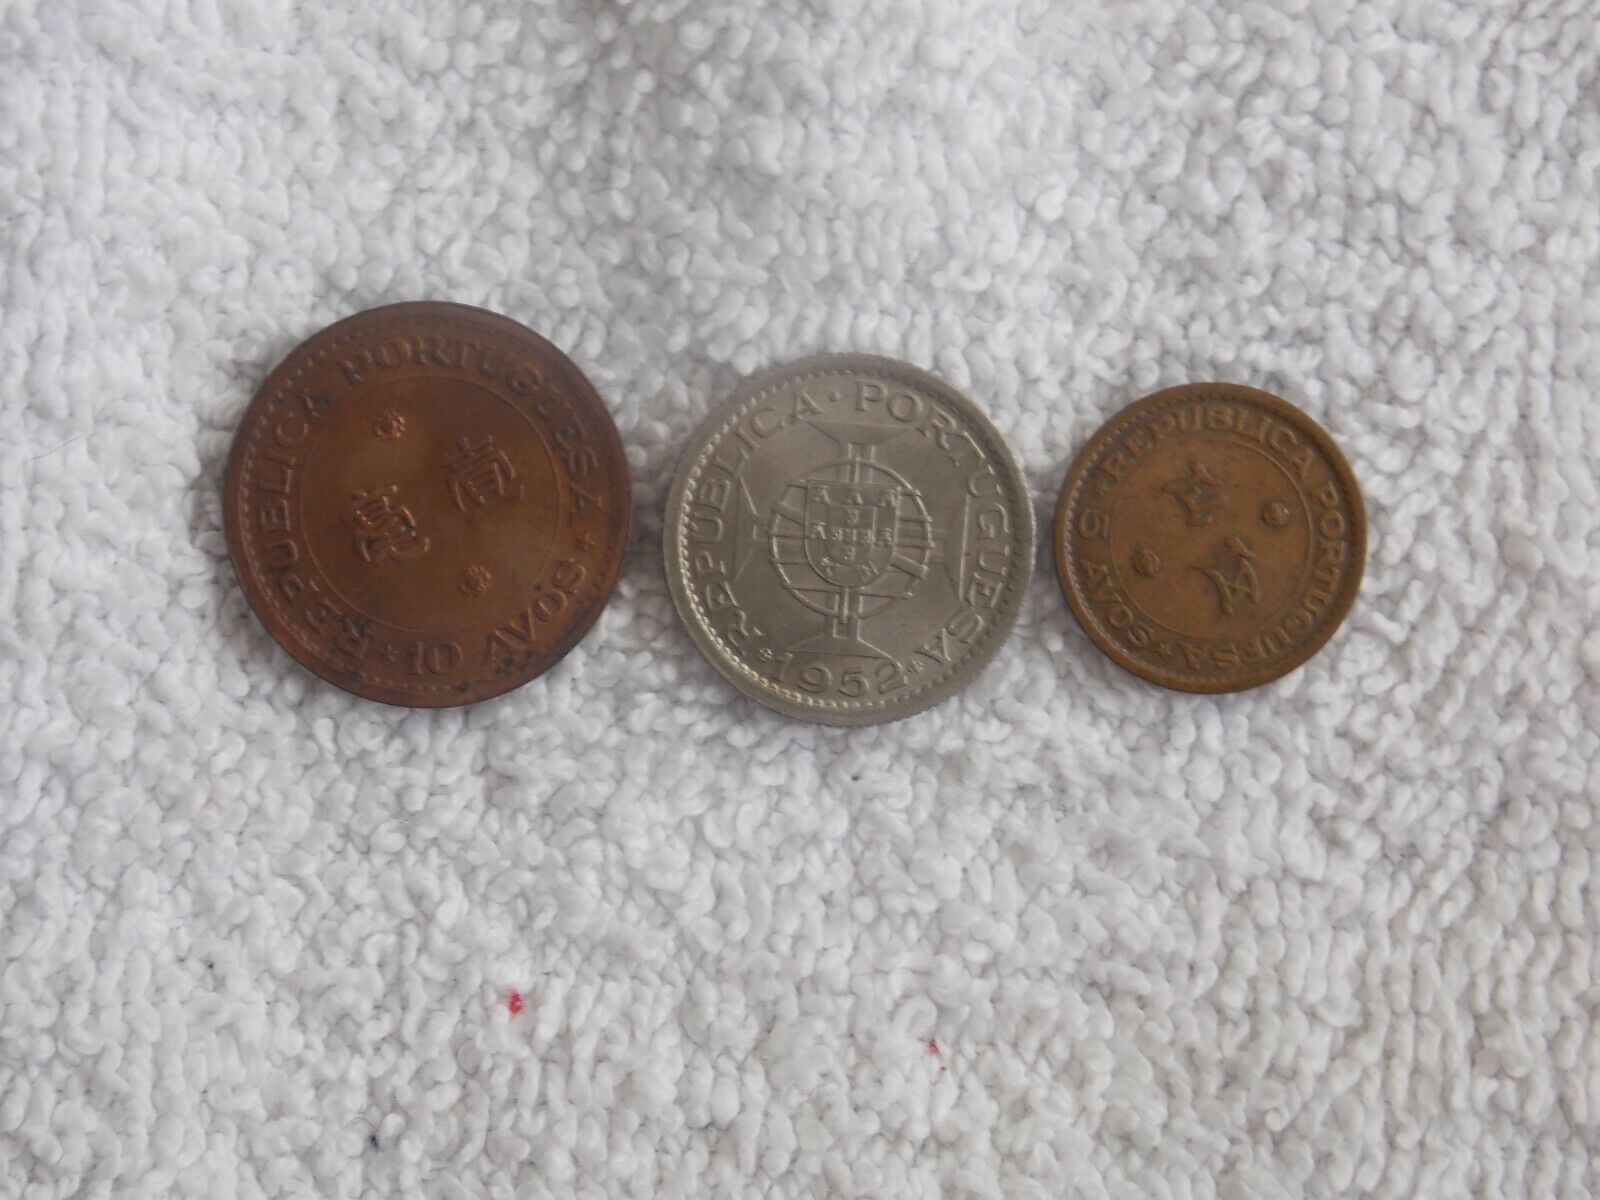 Angola and Macau coins Без бренда - фотография #3